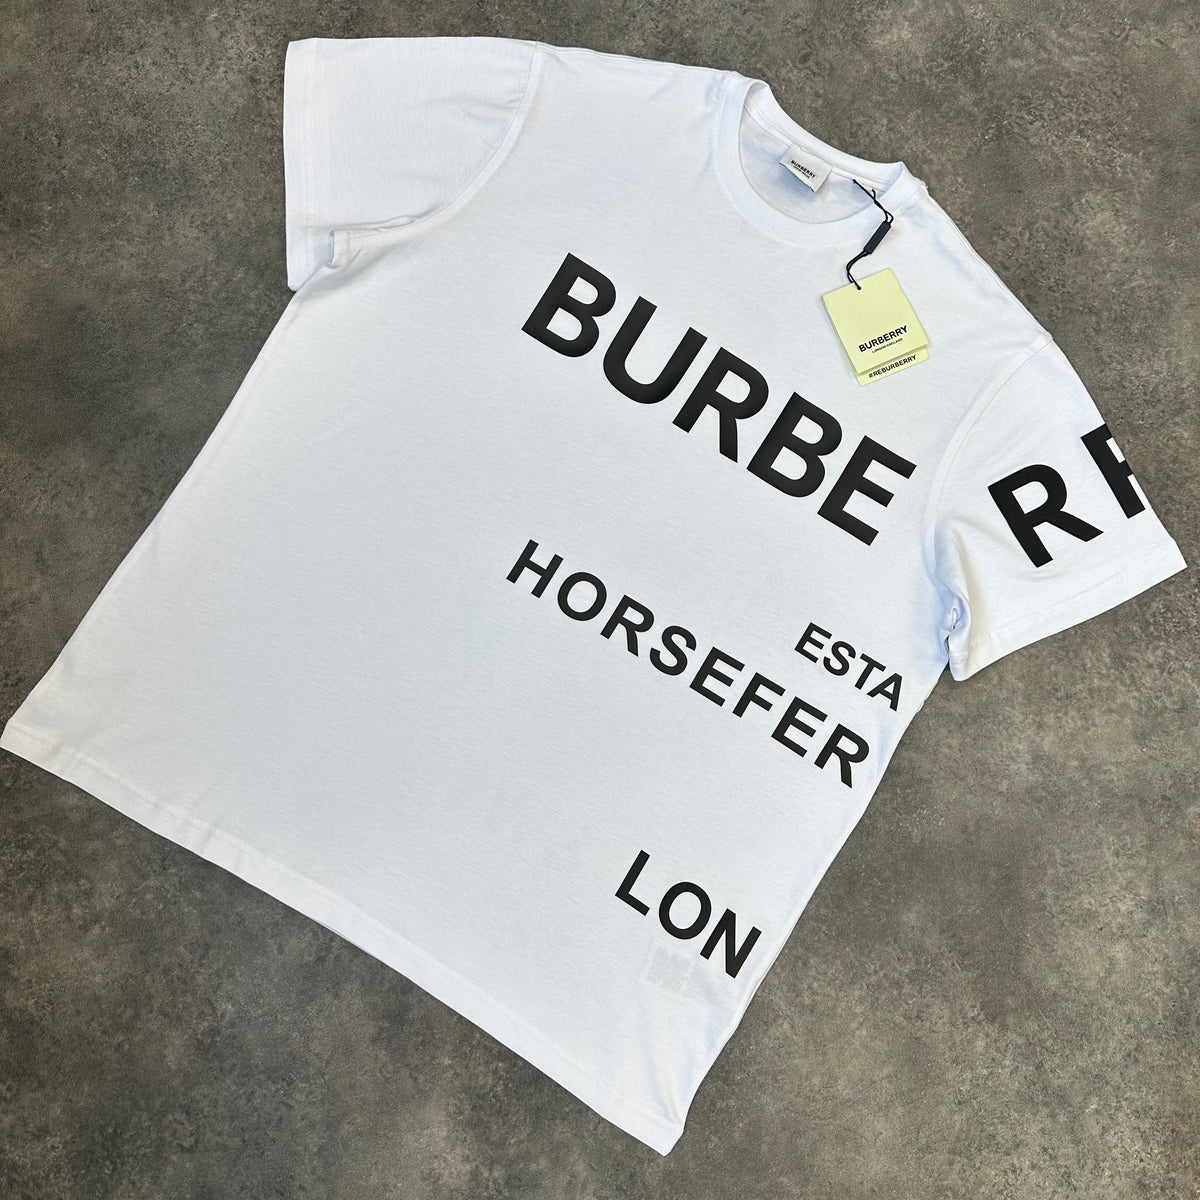 BURBERRY LONDON WRAP AROUND LOGO T-SHIRT WHITE